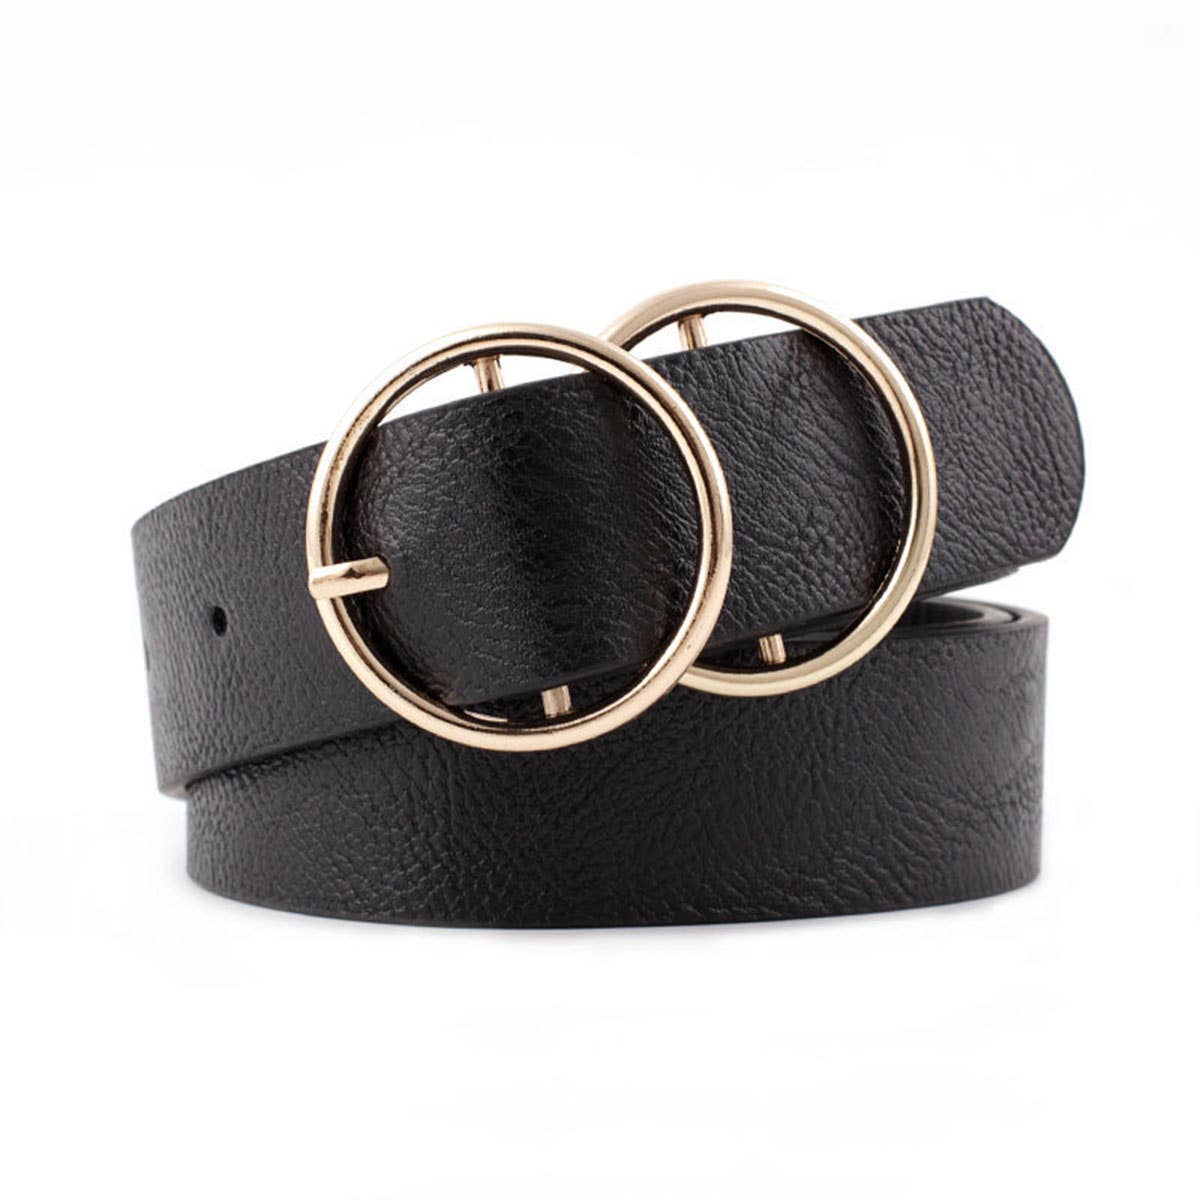 Simple Double O Buckle Fashion Belt